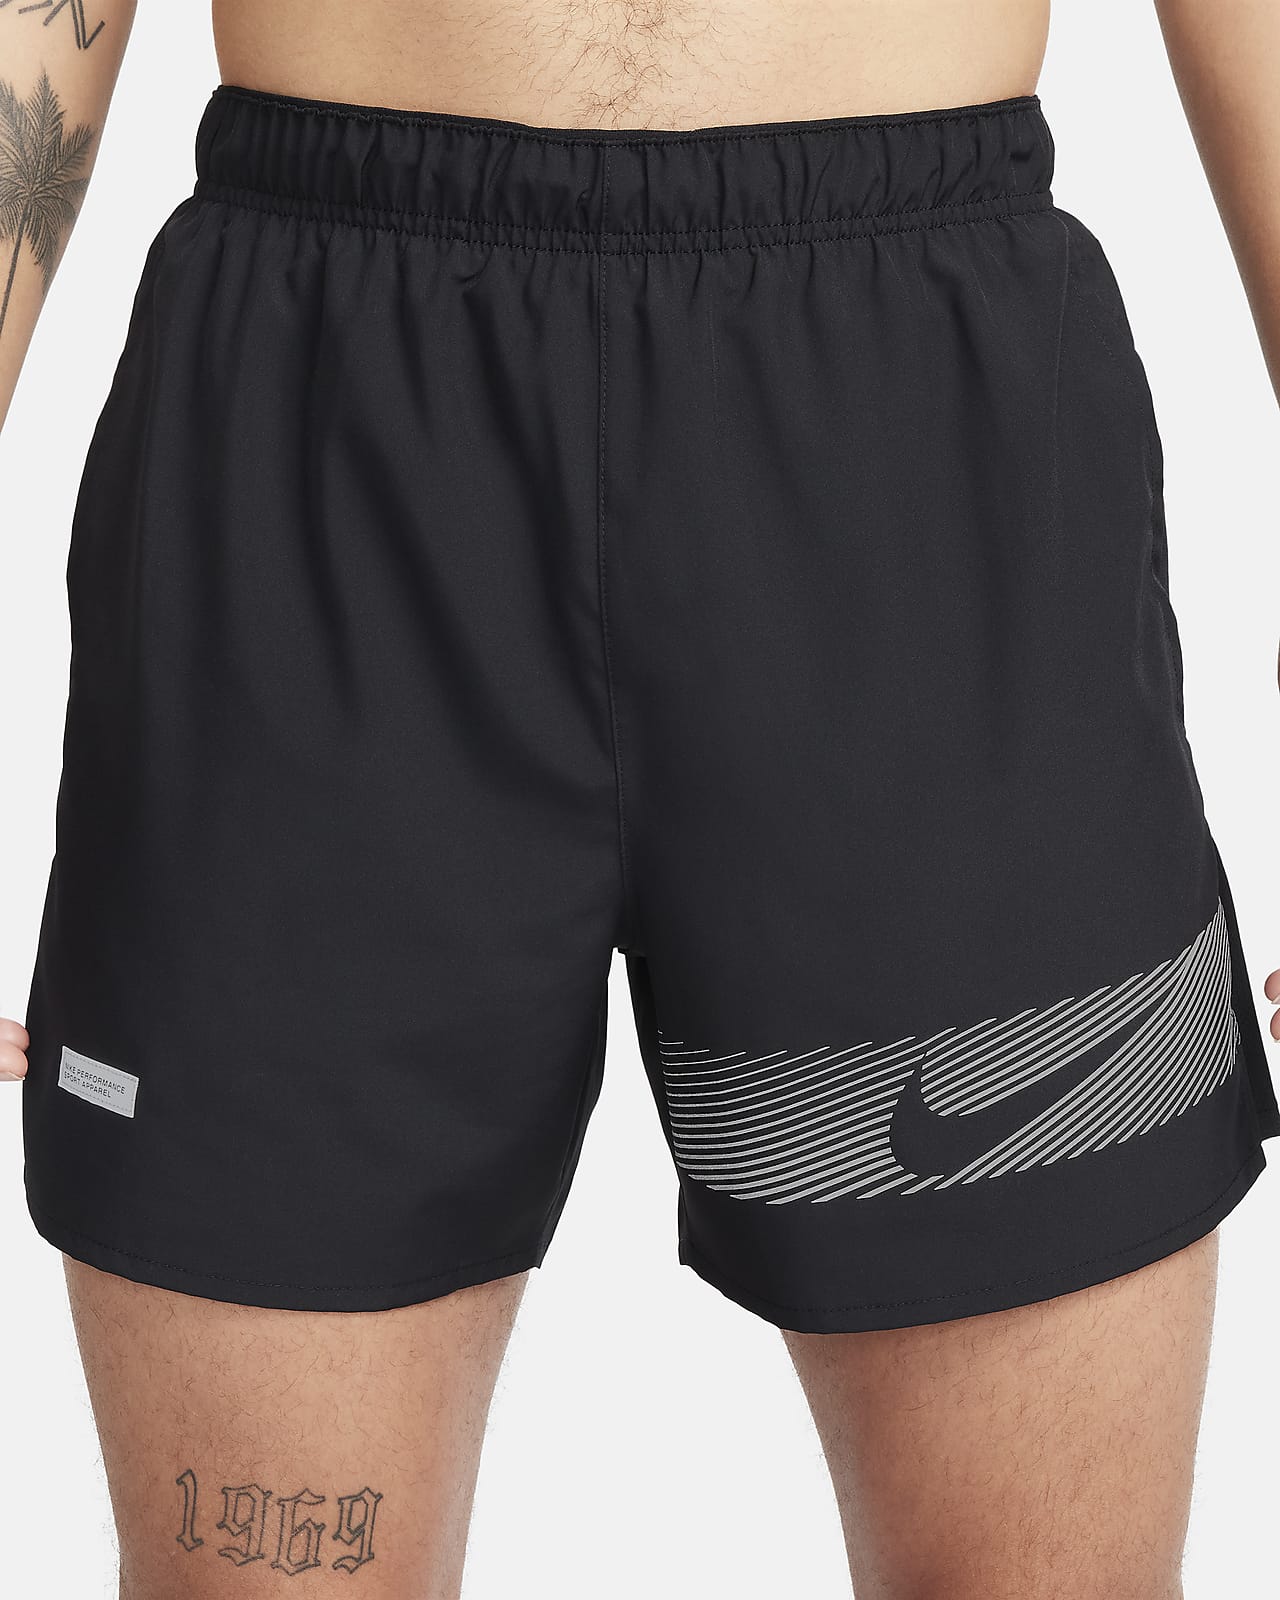 Men's Briefs. Nike CA